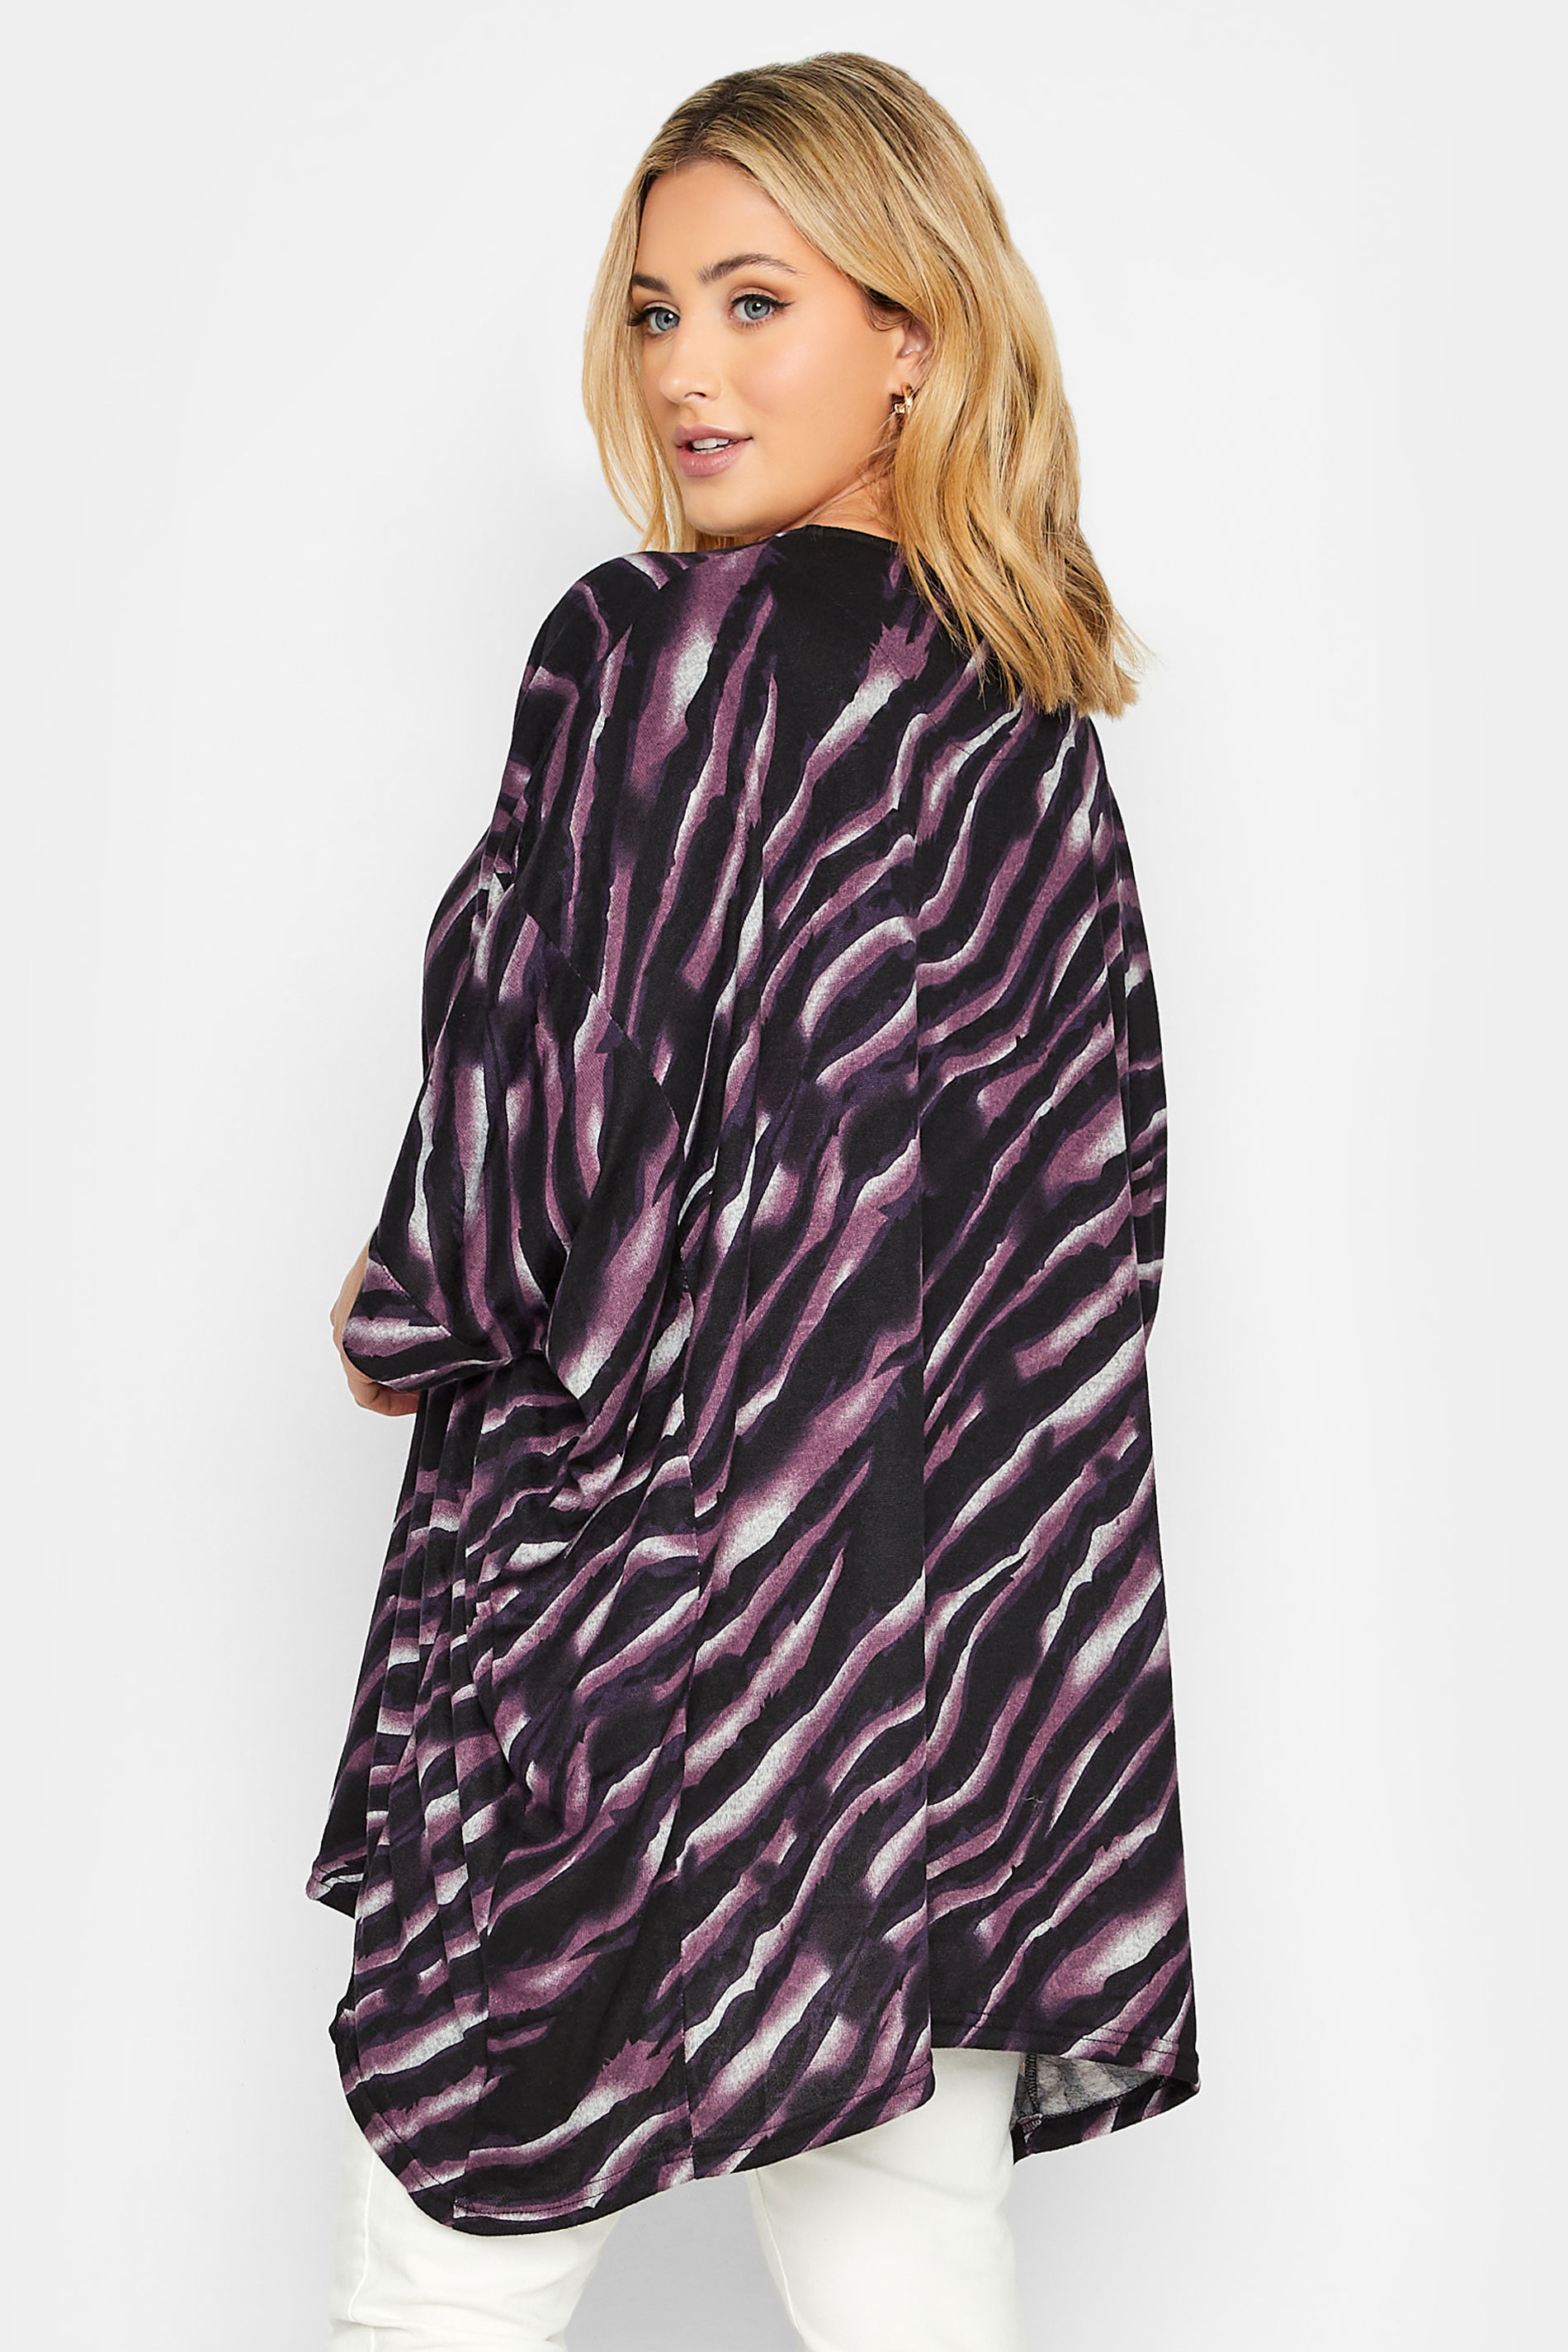 Plus Size Black & Purple Zebra Print Hanky Hem Top | Yours Clothing 3